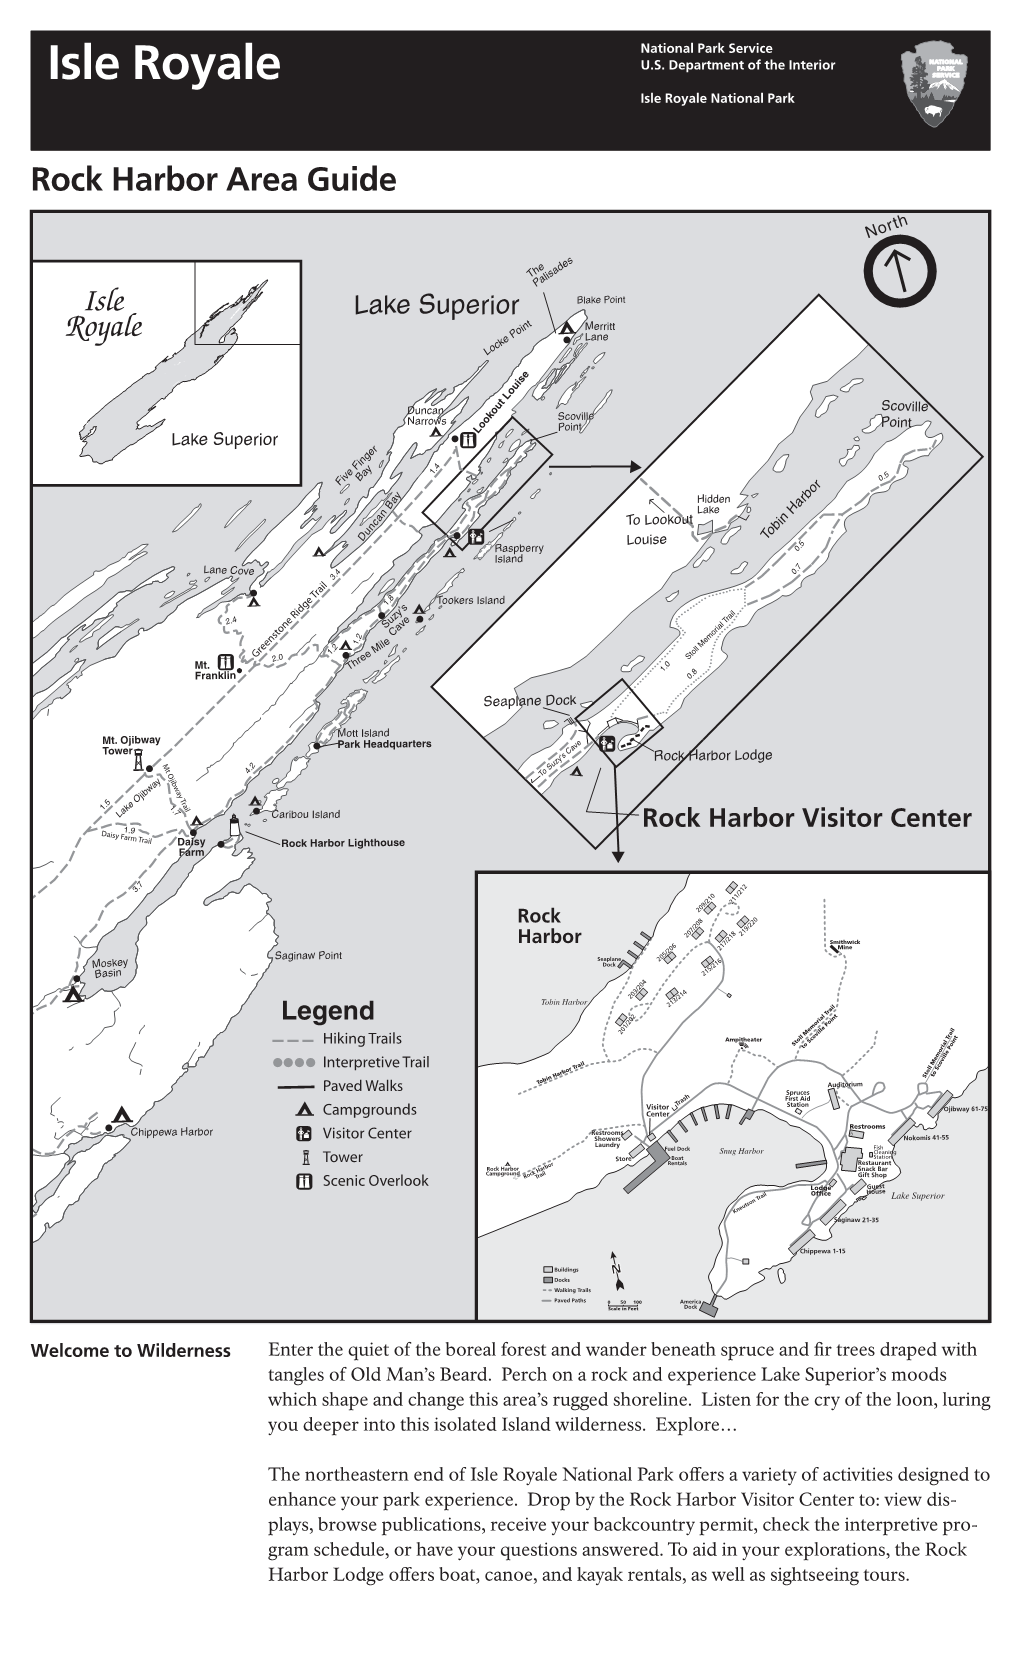 Rock Harbor Area Guide 2015